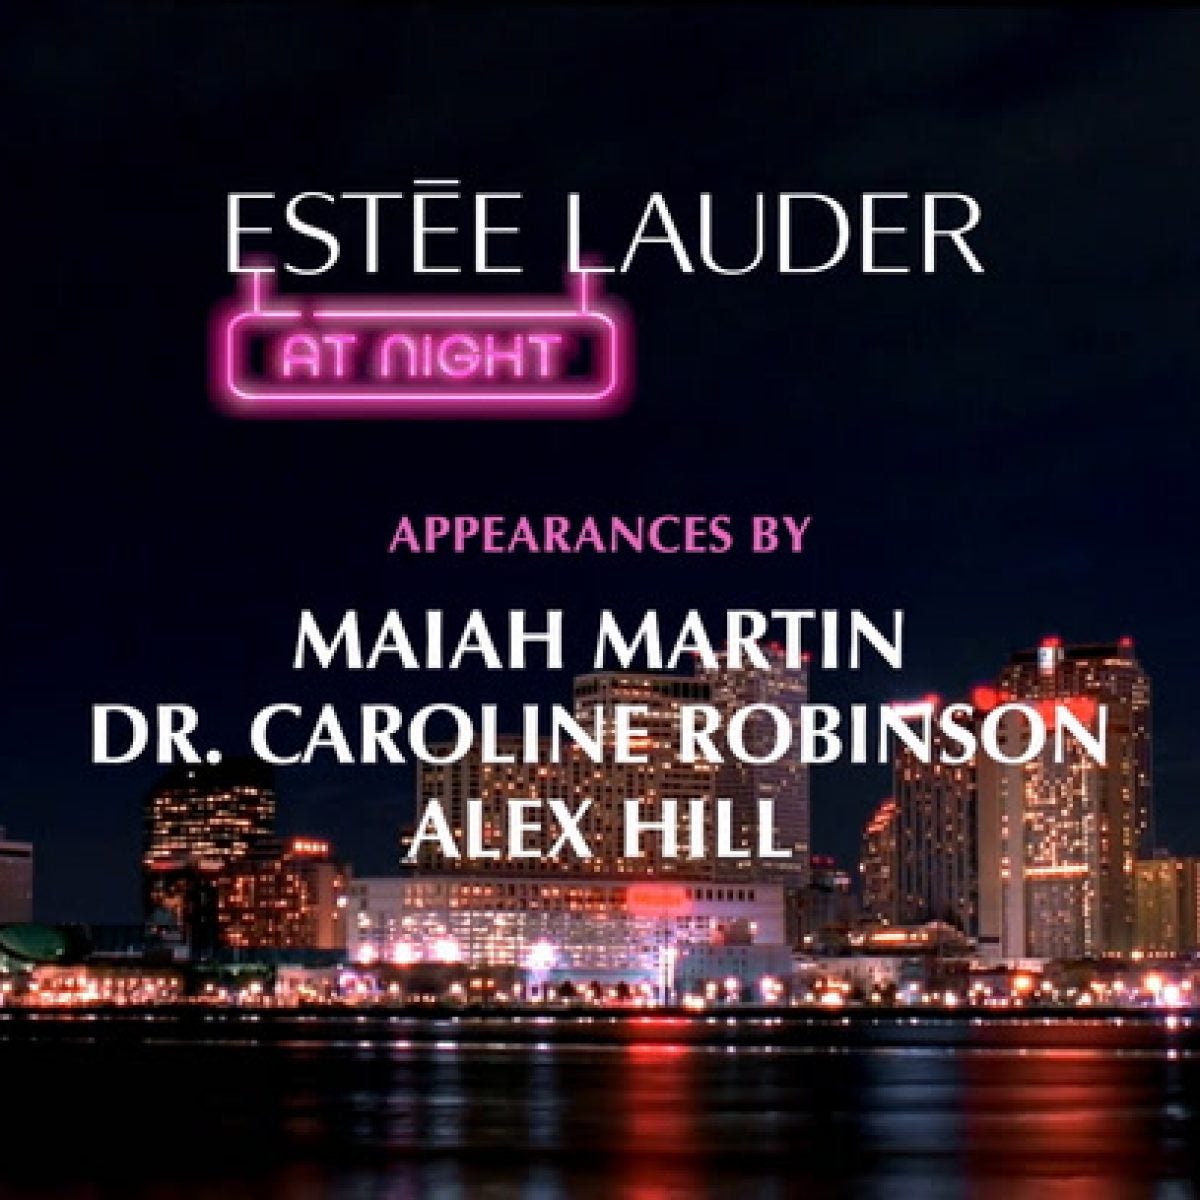 Bc.2.15.estee Lauder At Night 2 Fullshowassembly Dc 062721 Final Piclocked Cc Mix